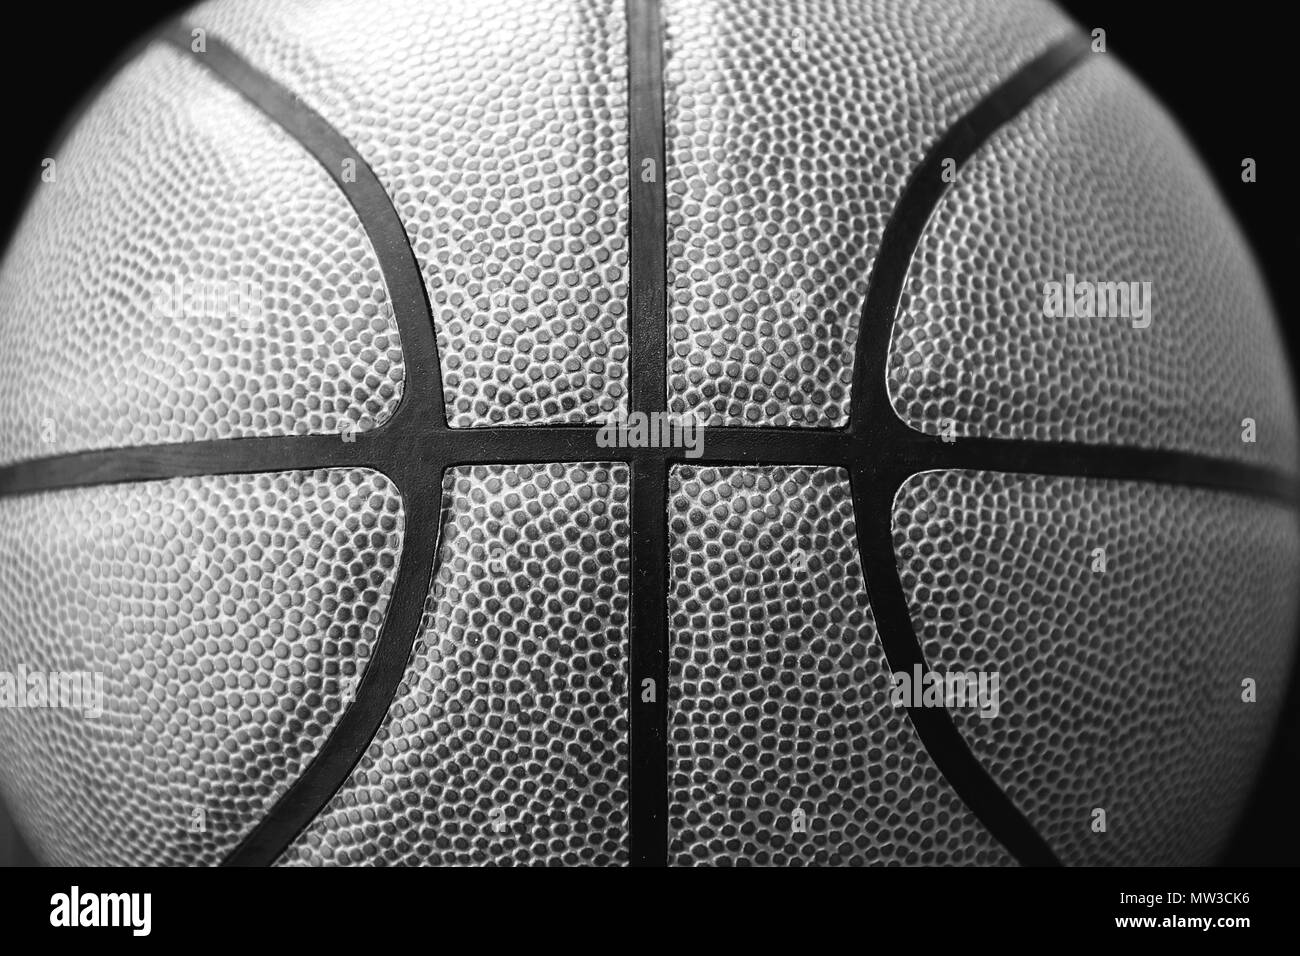 900 Basketball Background Images Download HD Backgrounds on Unsplash